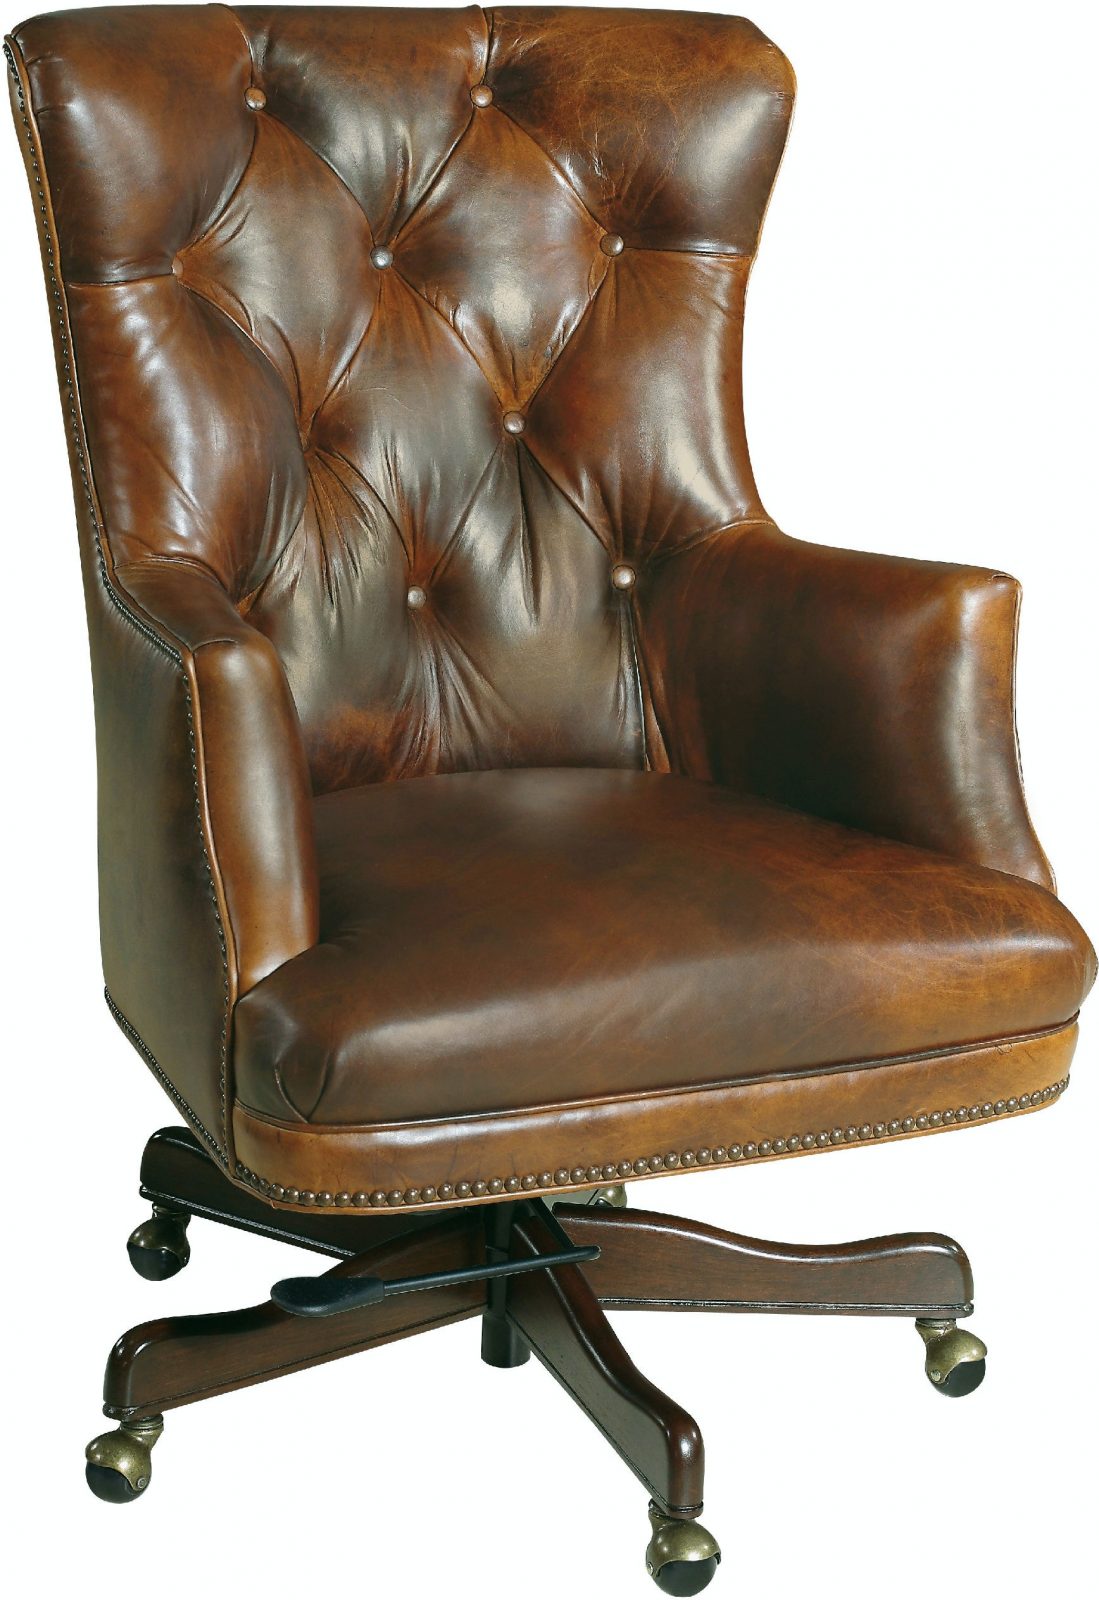 Bradley executive leather desk chair